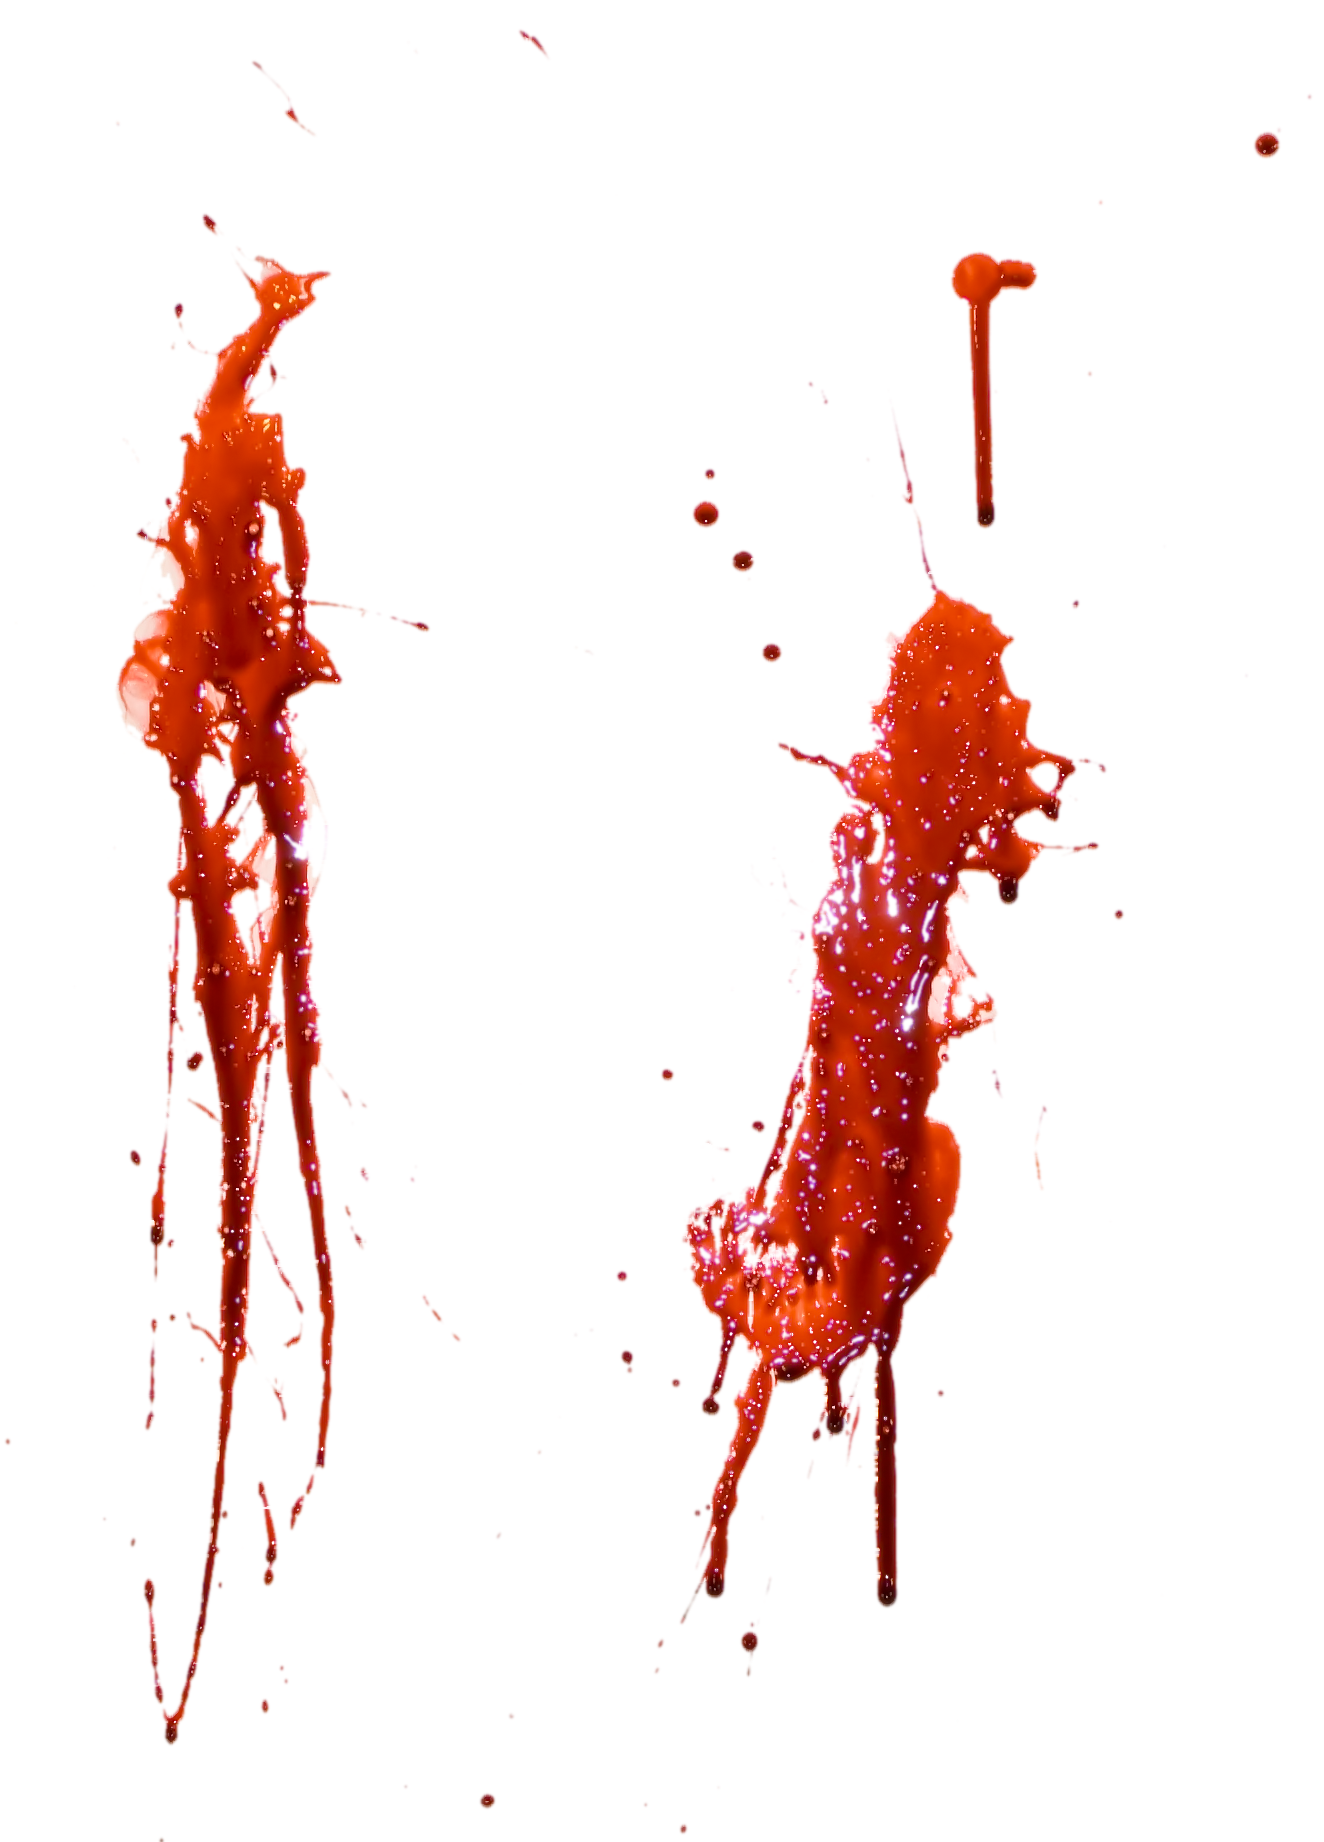 Blood png transparente. Images free download splashes